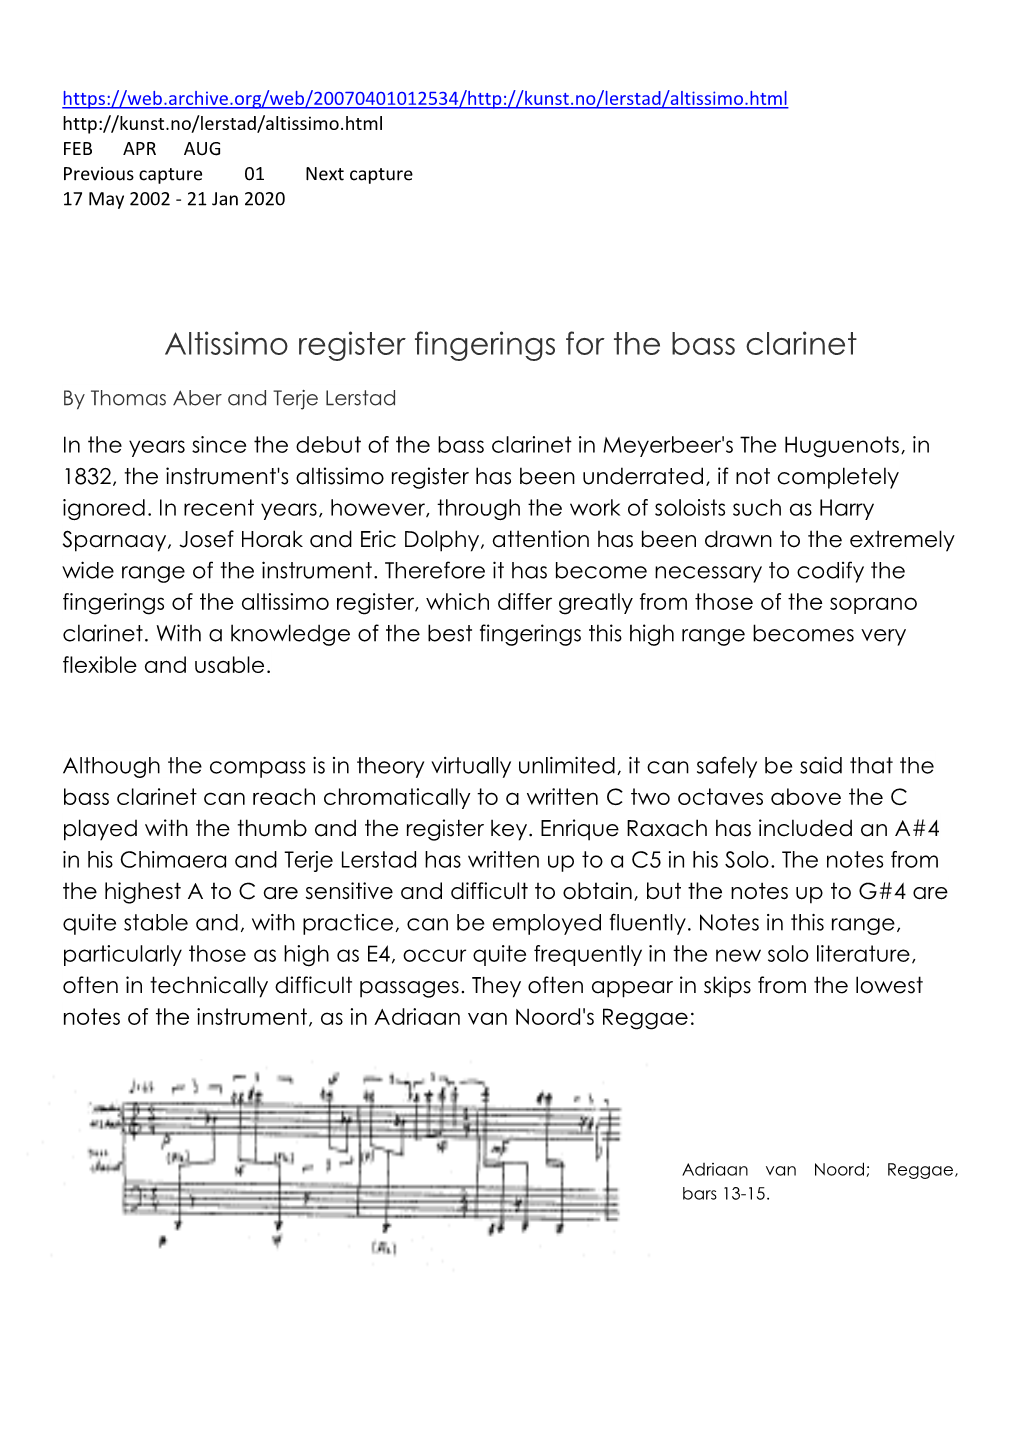 Altissimo Register Fingerings for the Bass Clarinet